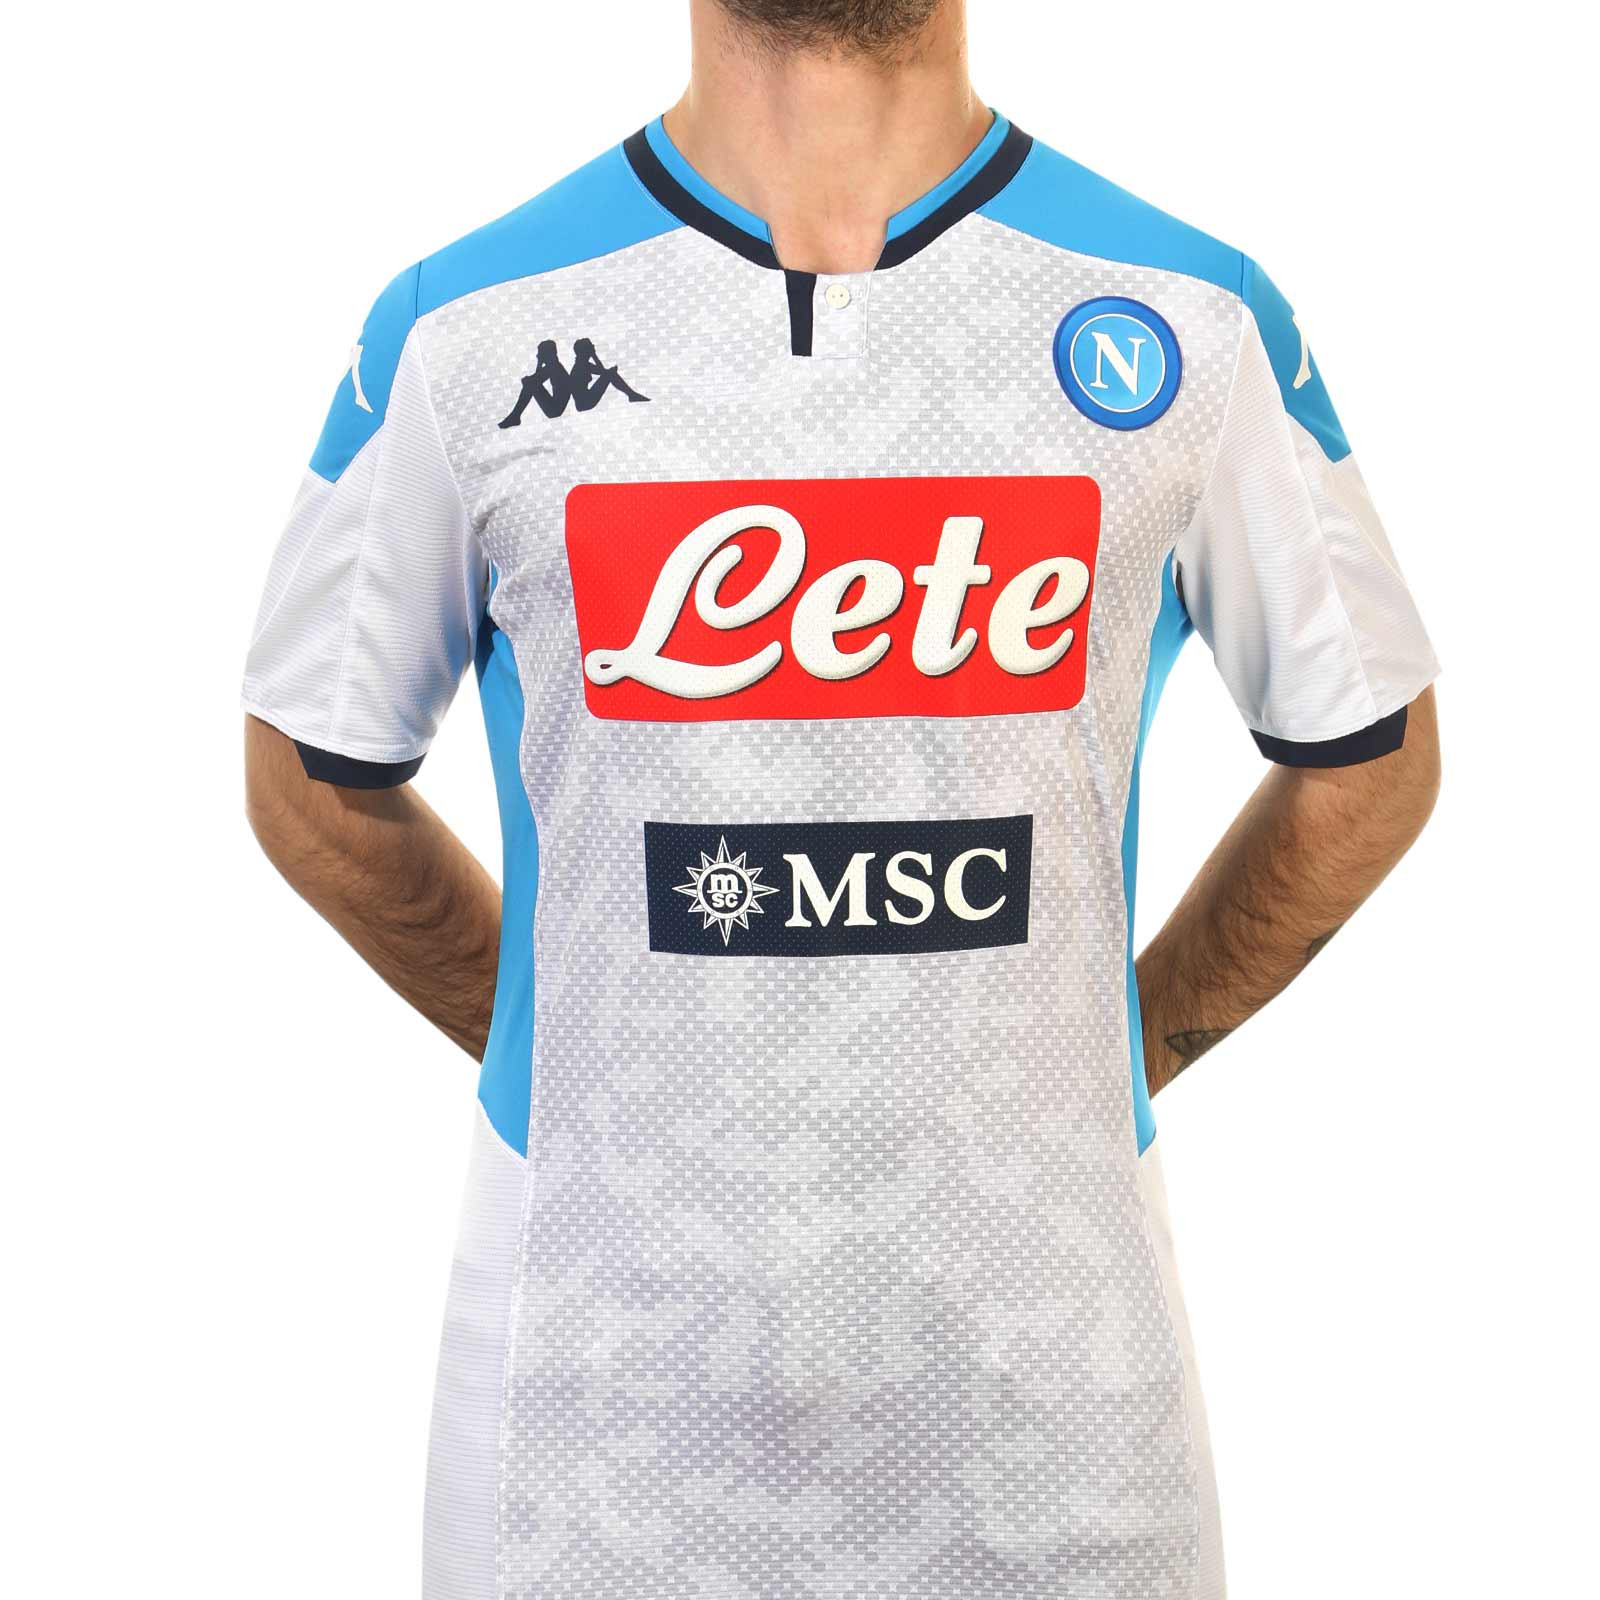 SSC Napoli Tercera camiseta de juego